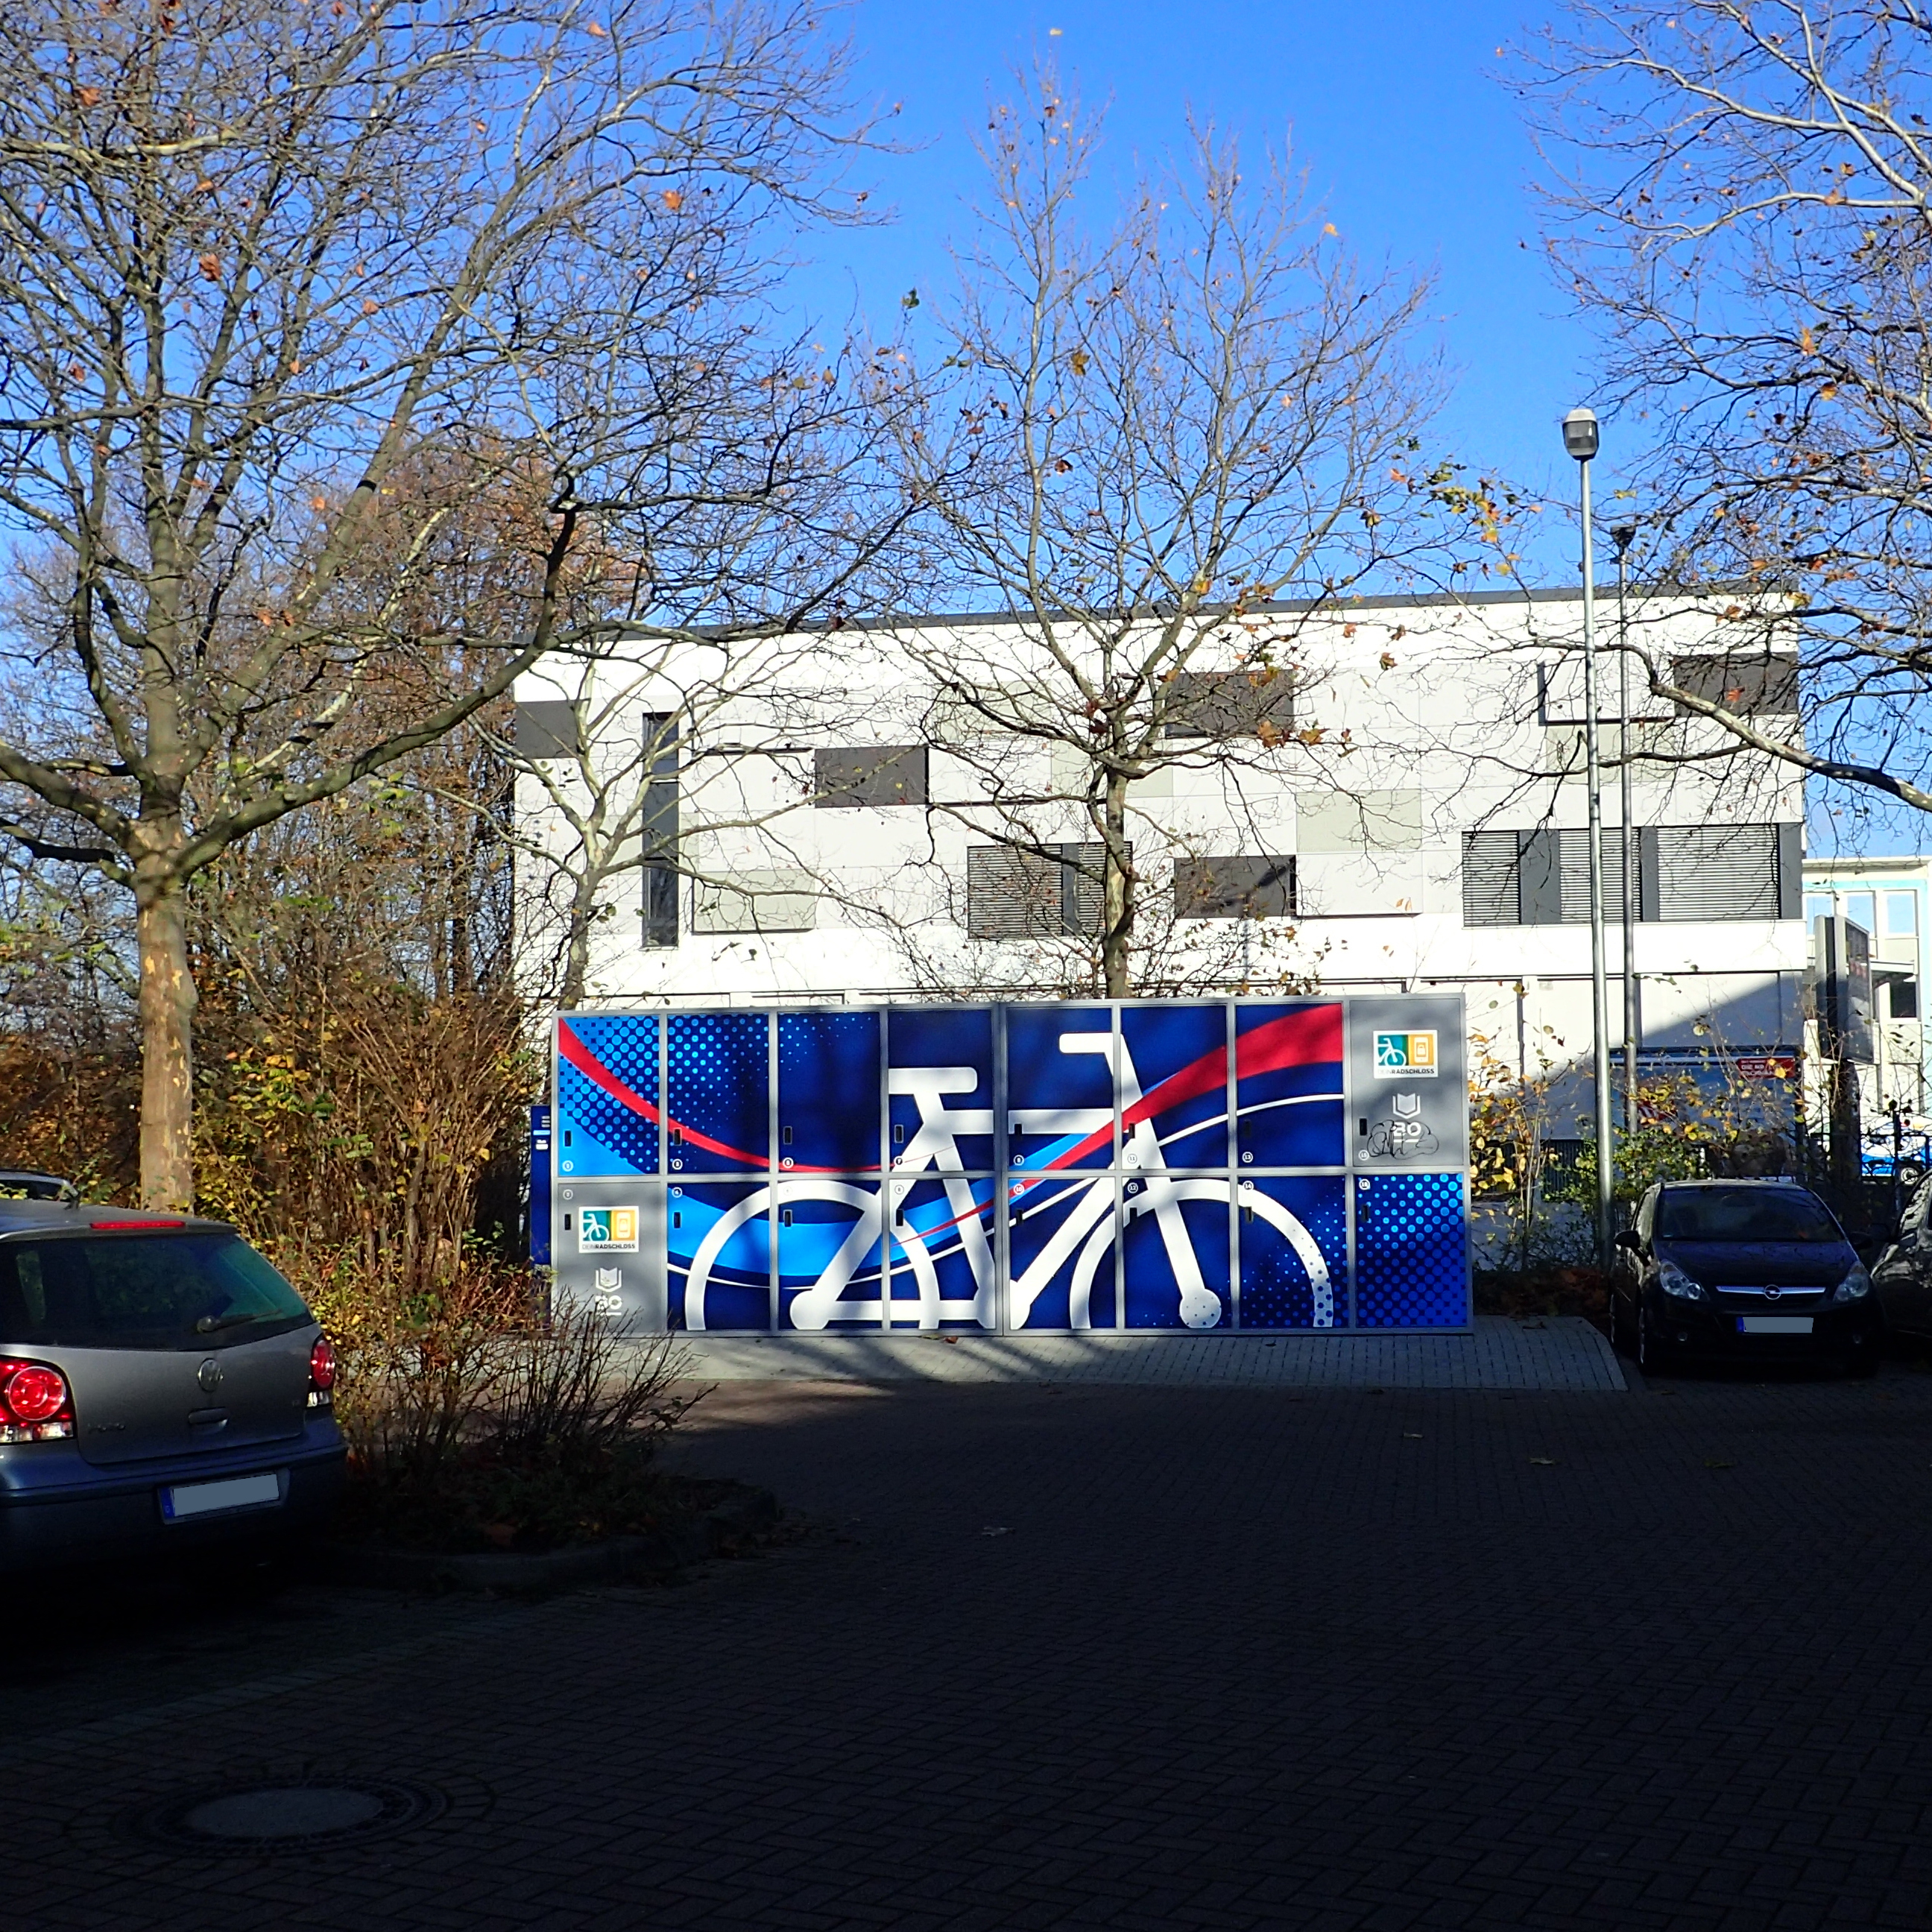 File:Fahrradbox Bochum BF Ehrenfeld dein-Radschloss.jpg - Wikimedia Commons